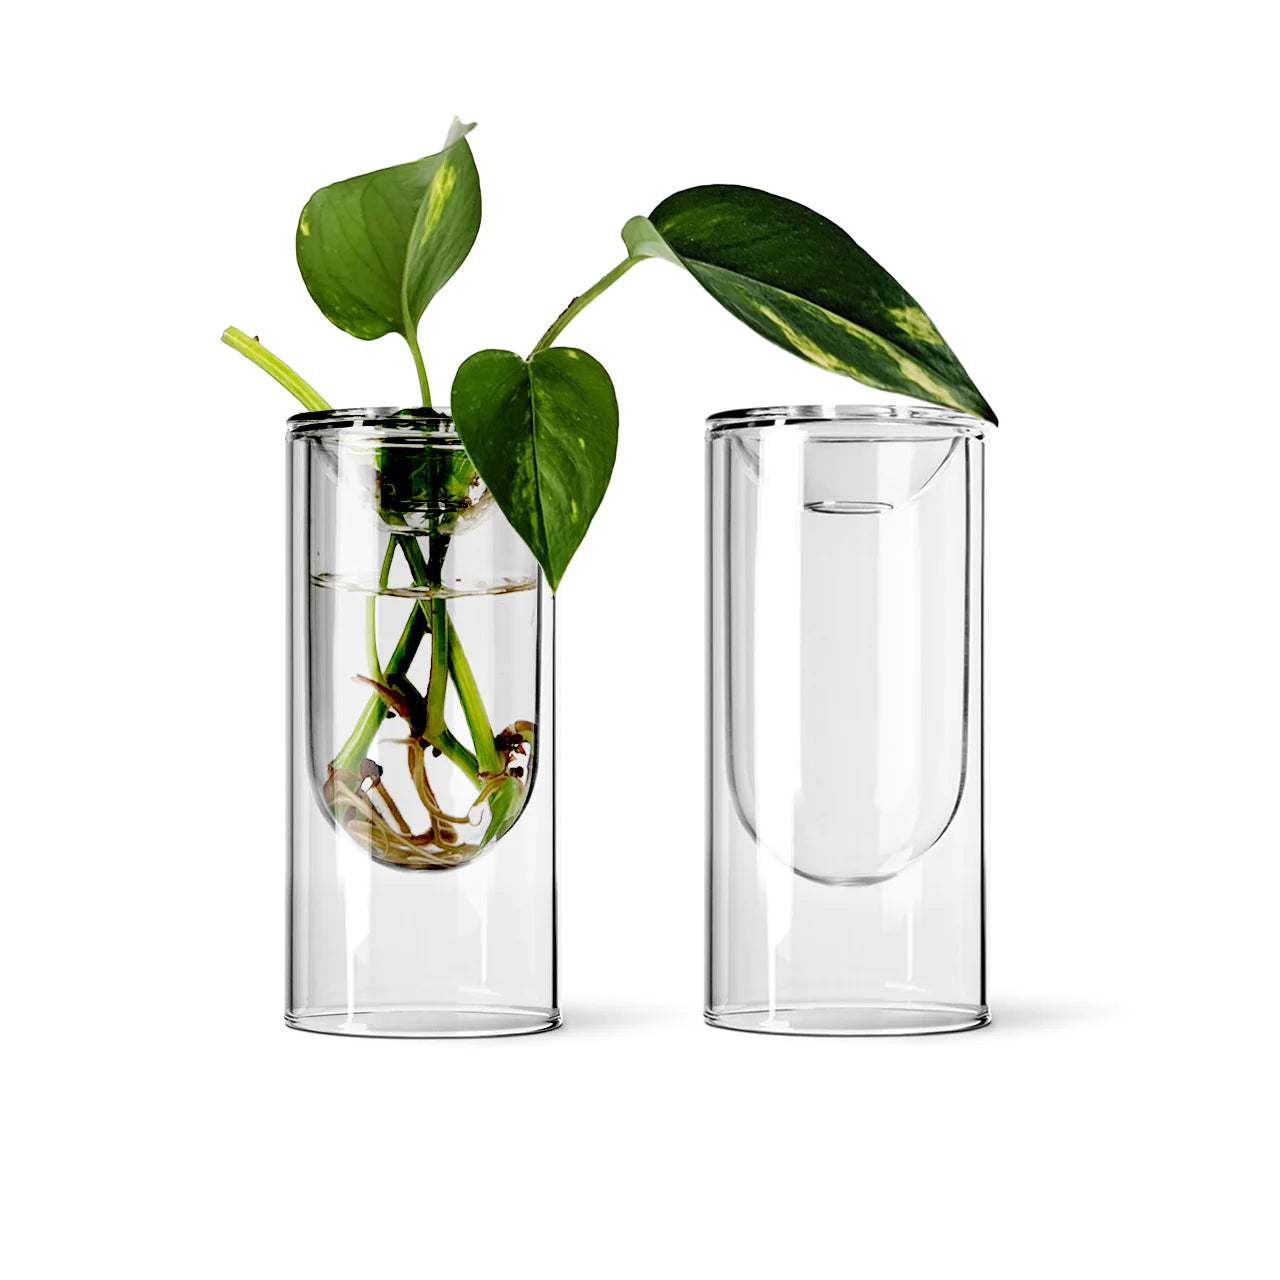 Propagation Vase Small, Set of 2